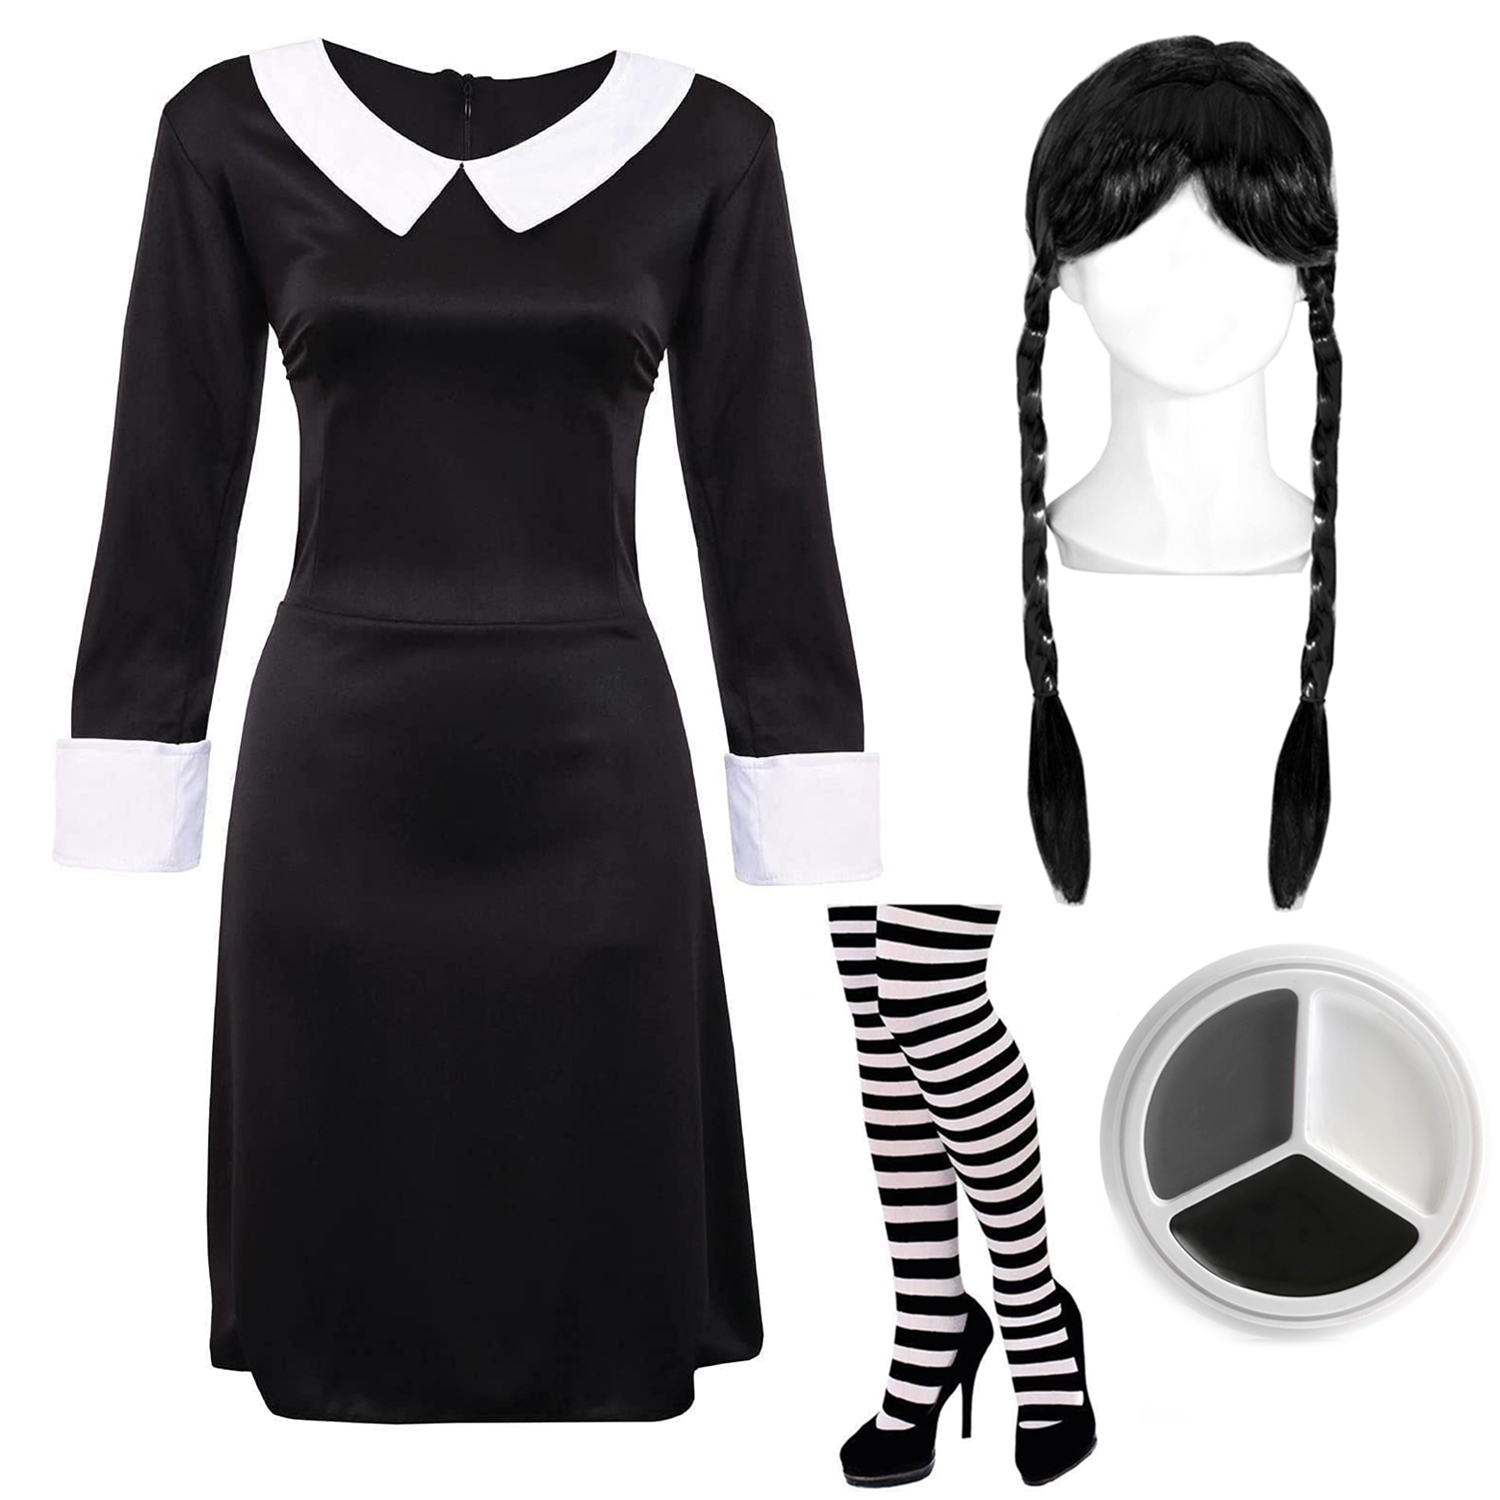 Kids Wednesday Addams Costume - I Love Fancy Dress